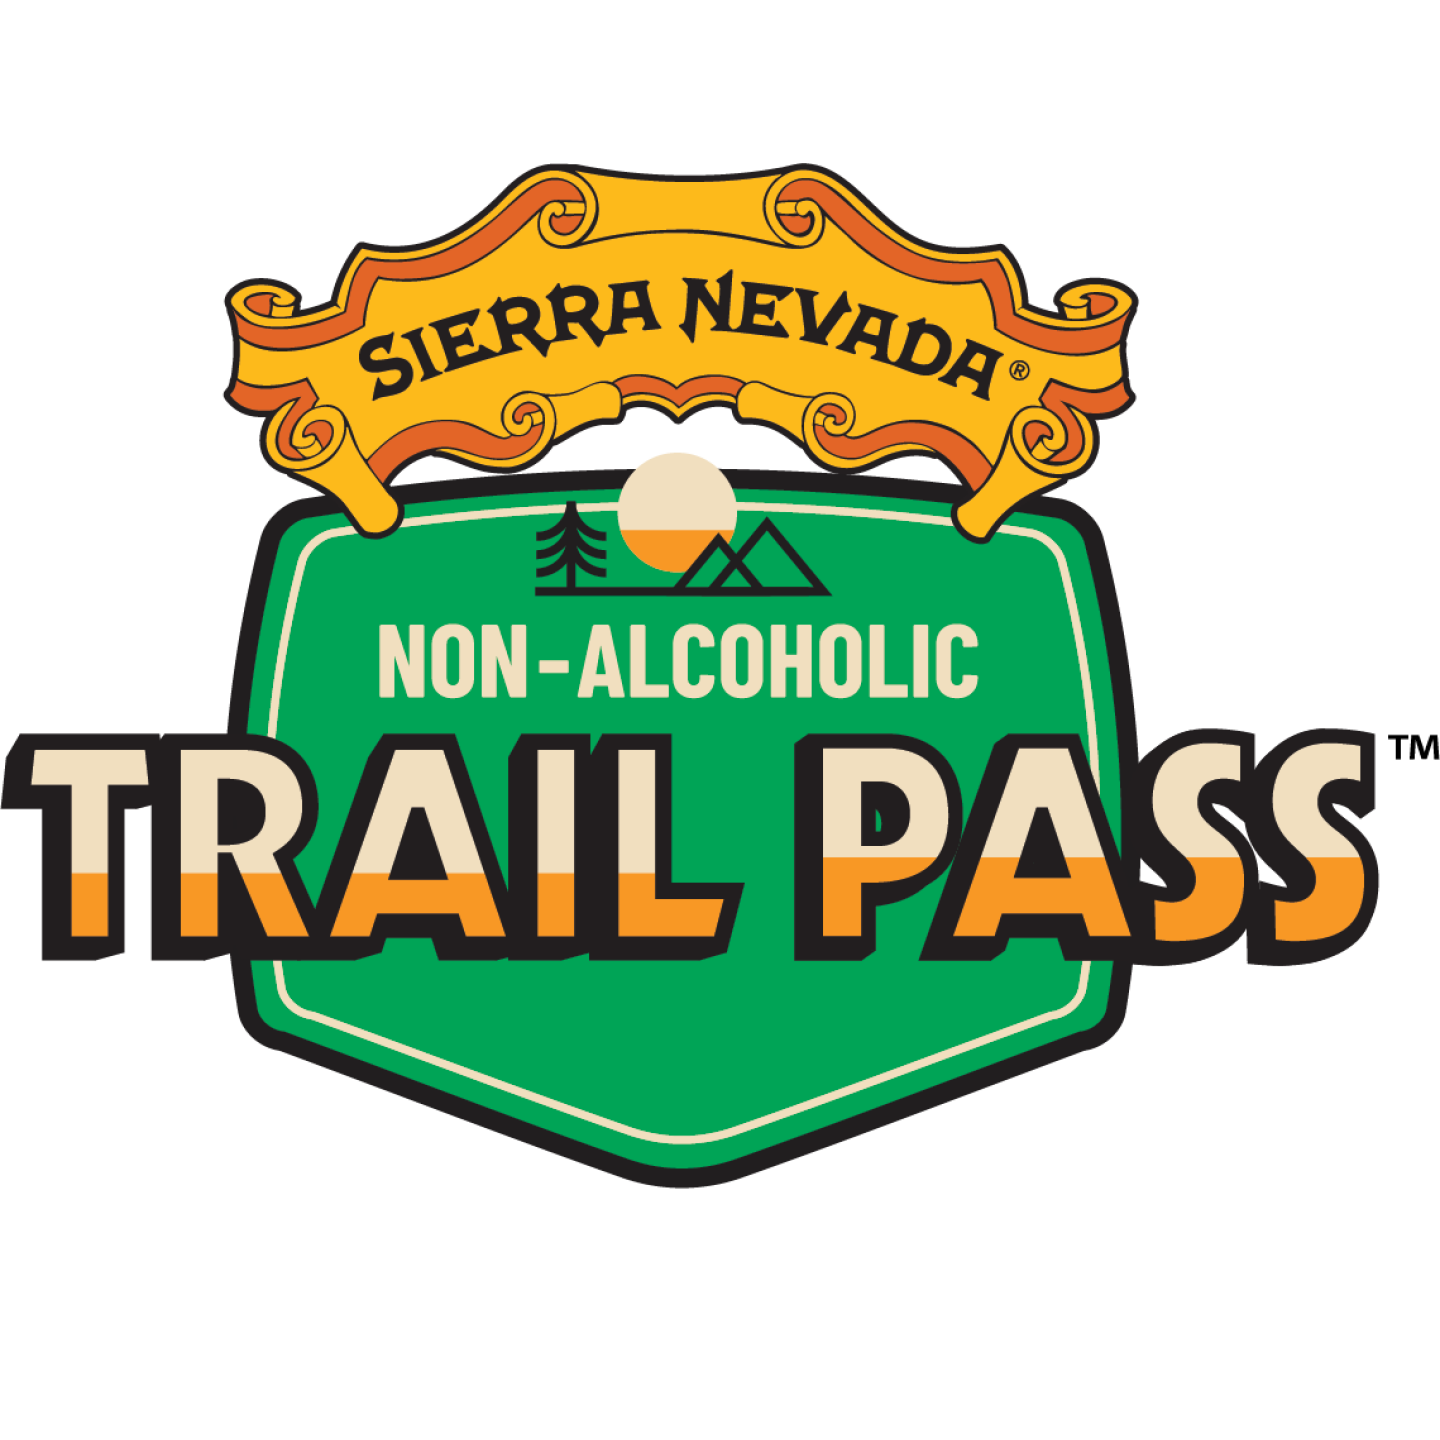 Sierra Nevada Trail Pass Image 1